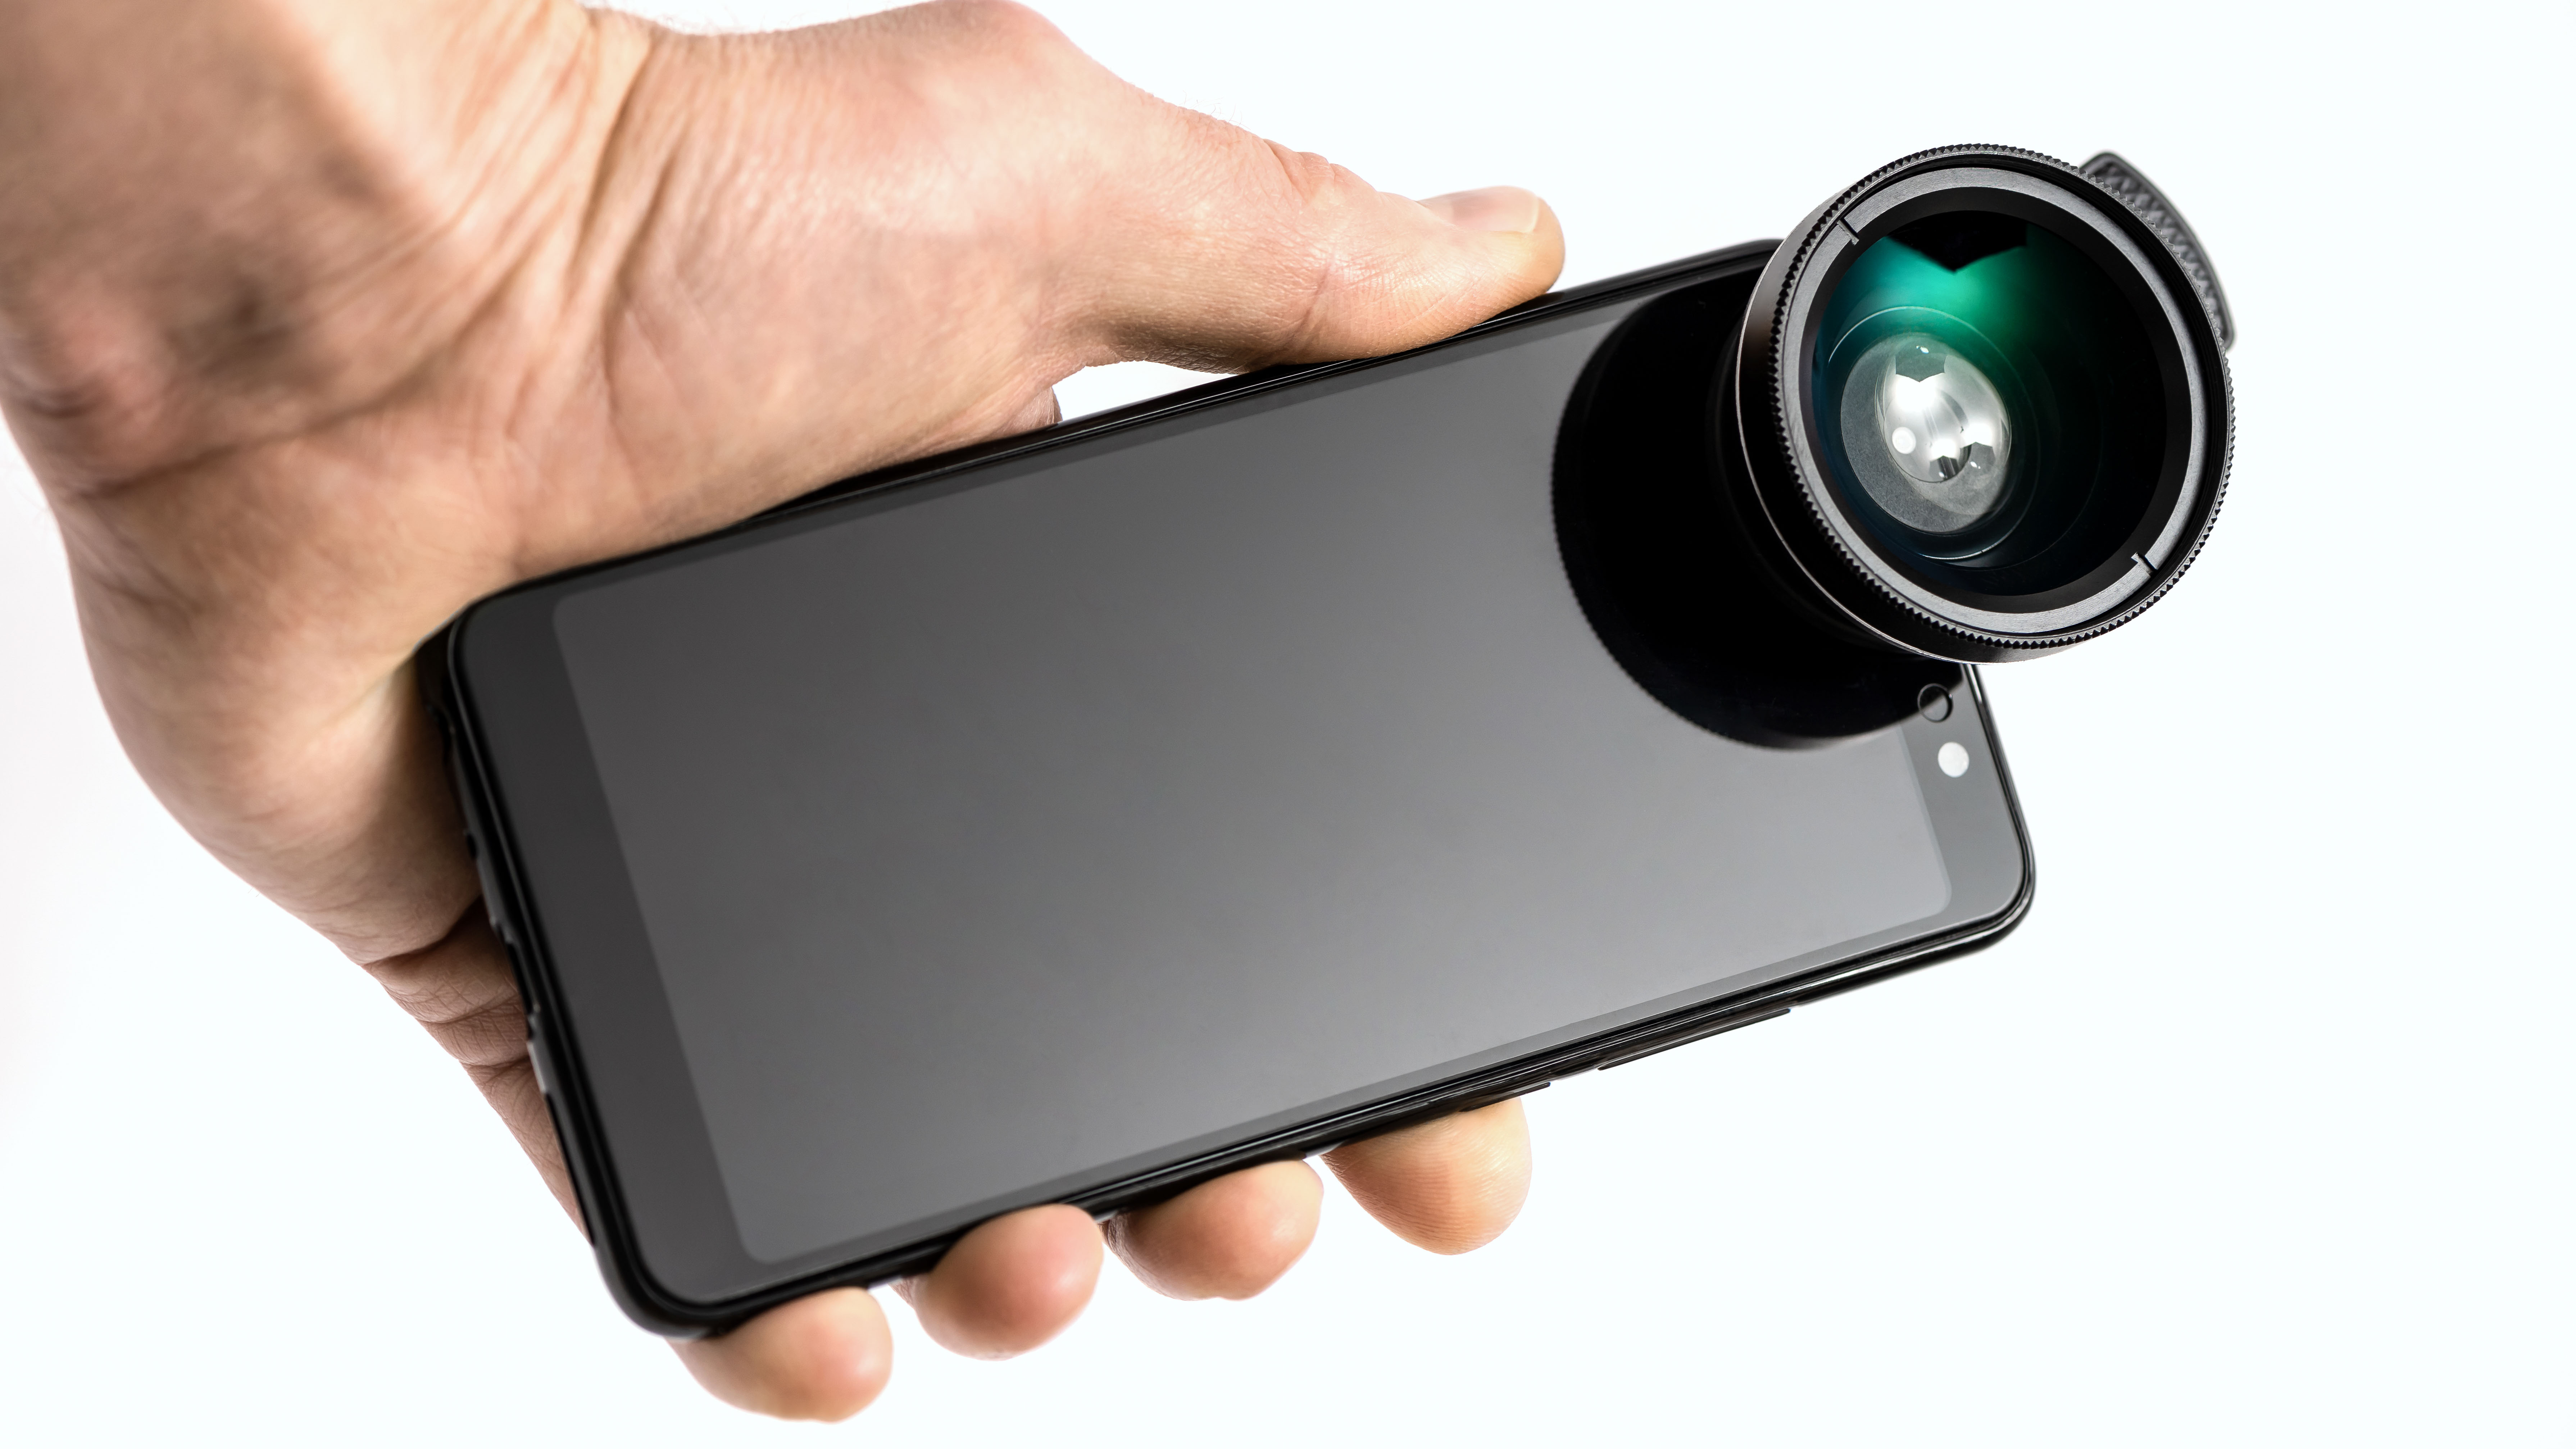 Mobile phone lens macbook pro 13 inch retina display price in dubai